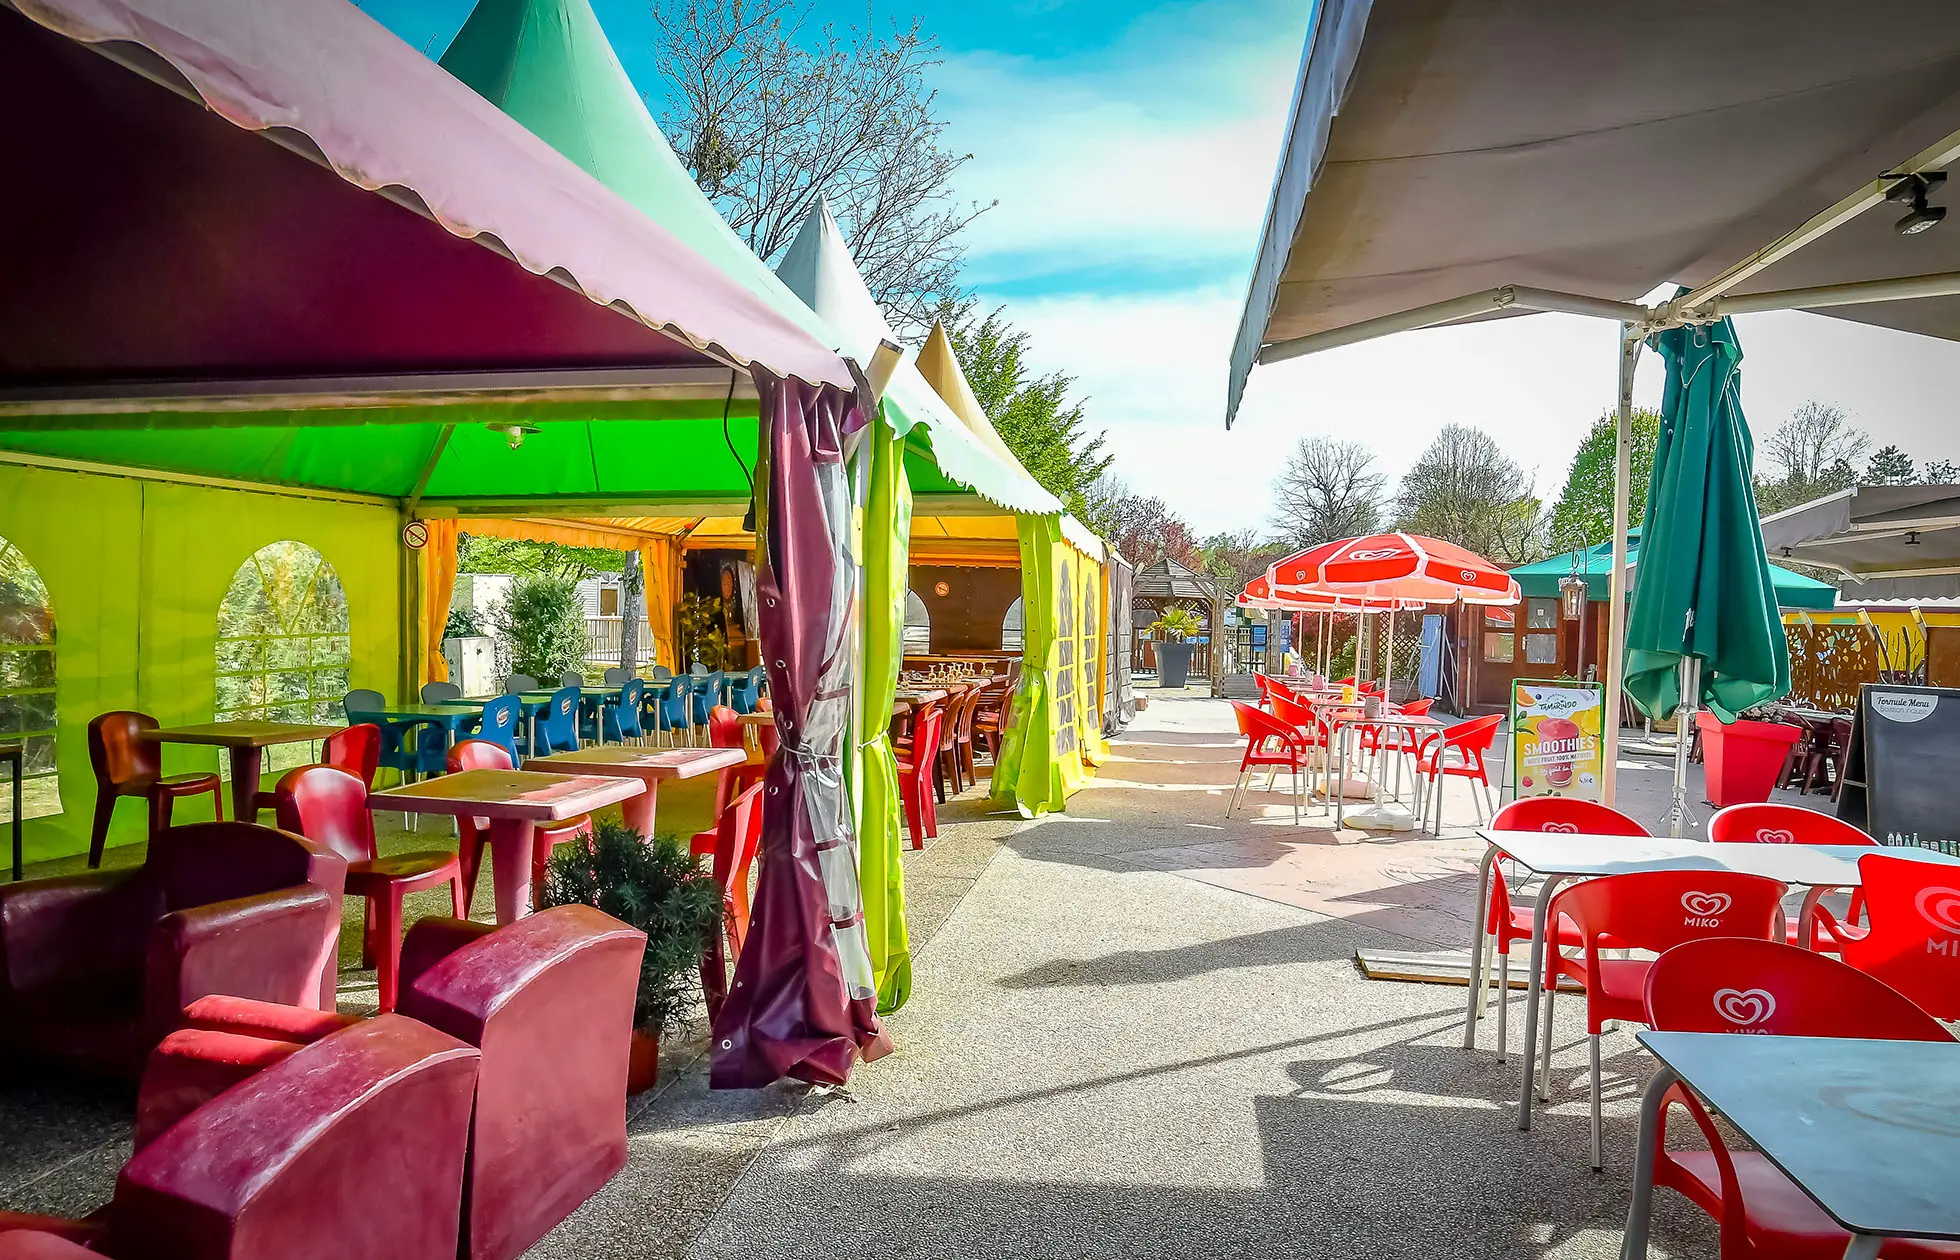 offer ' - '19 - Camping Le Jardin de Sully - Service